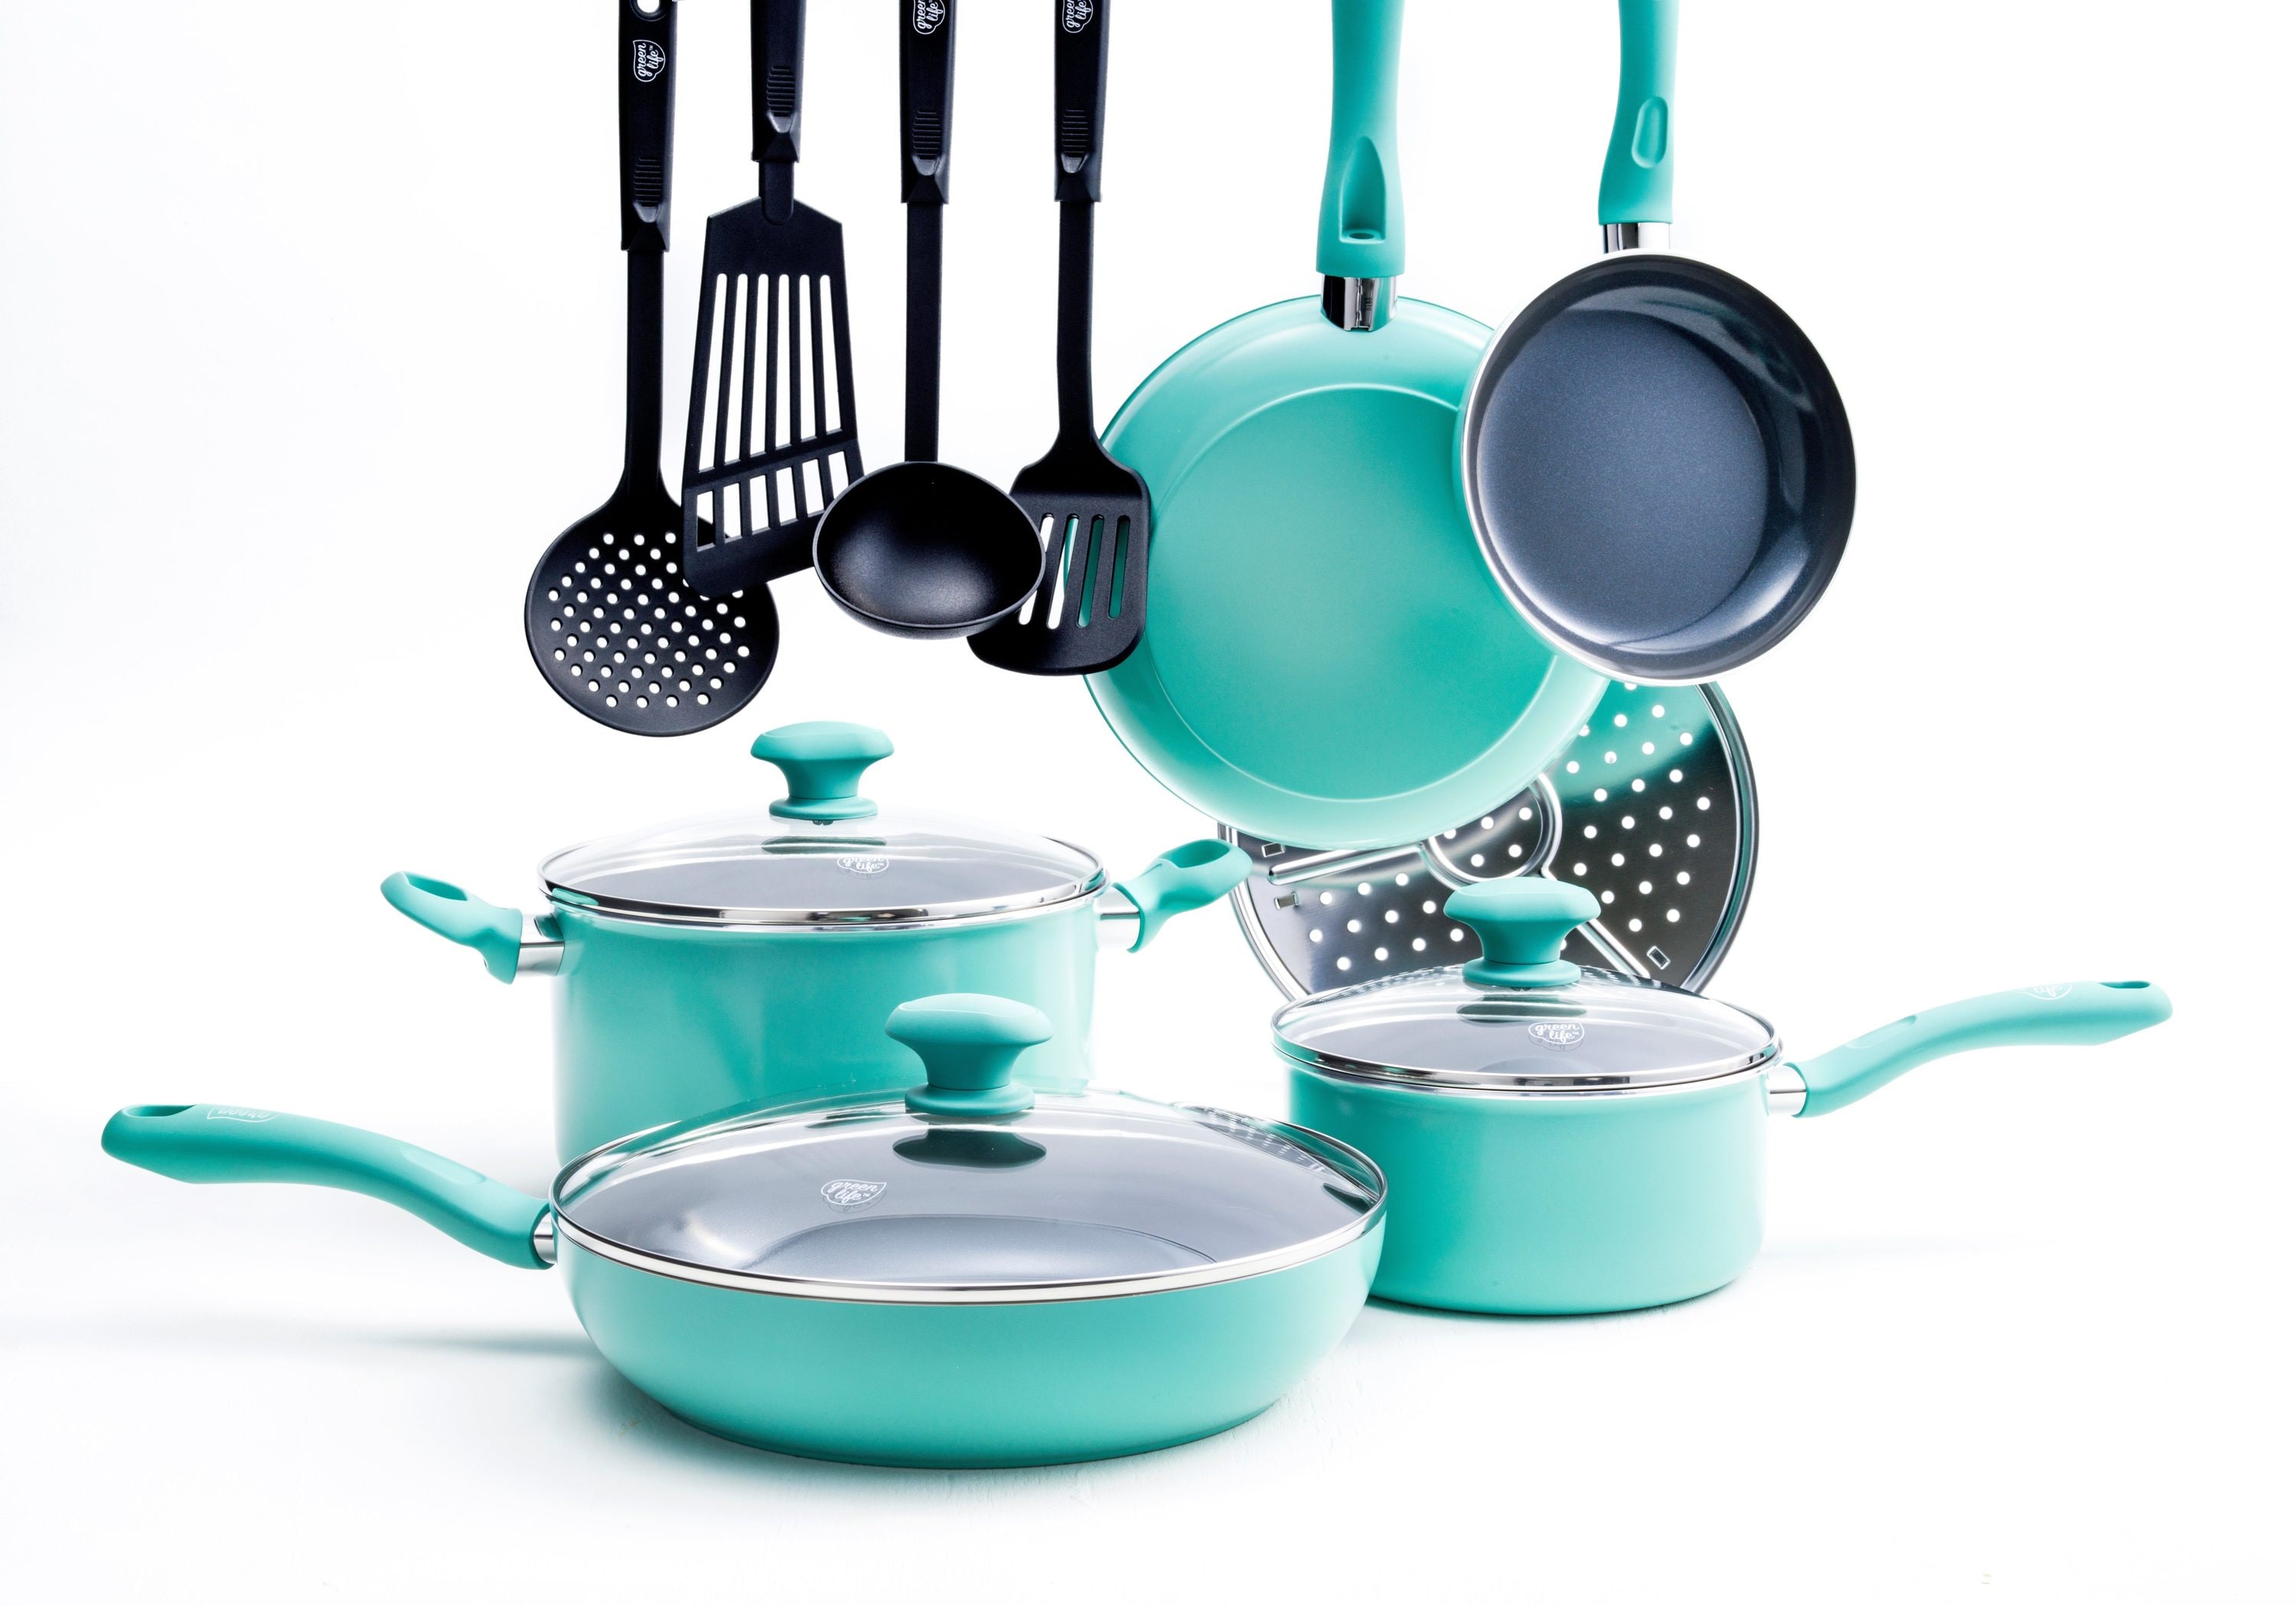 GreenLife Frying Pan Set, 8'' & 10'', Dark Gray